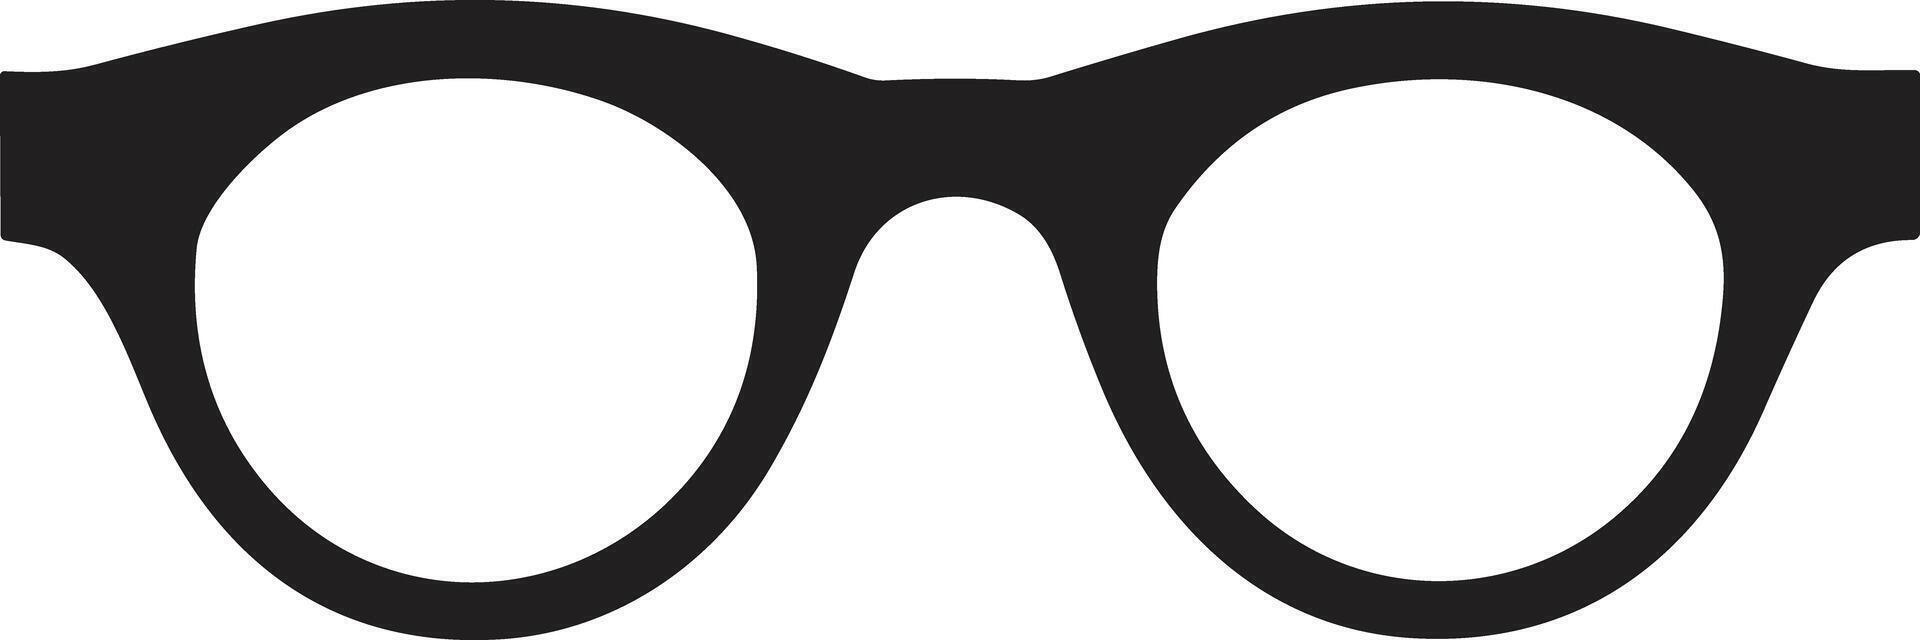 bril logo of insigne in wijnoogst of retro stijl vector